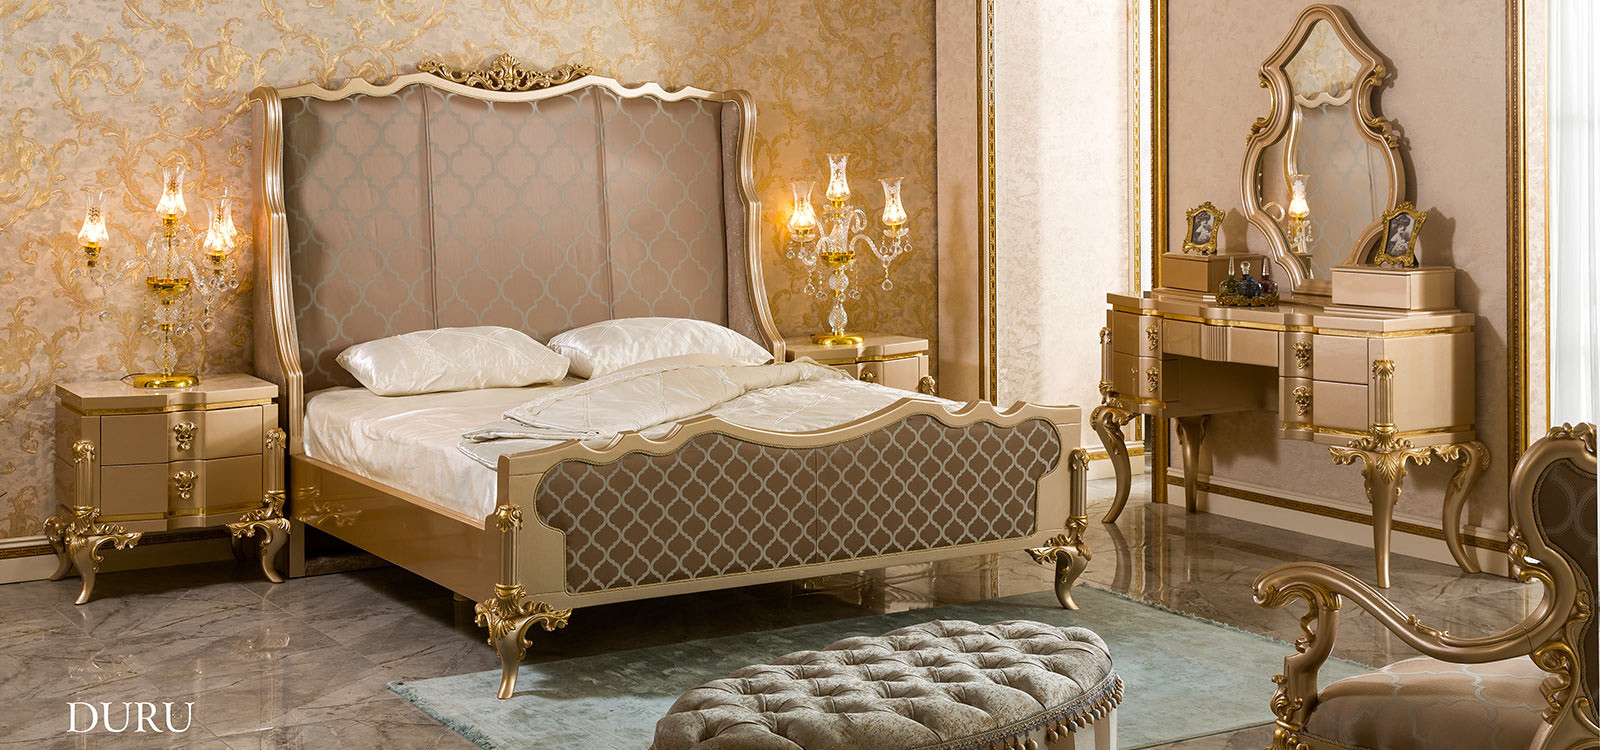 Turkish classic bed set (Duru)